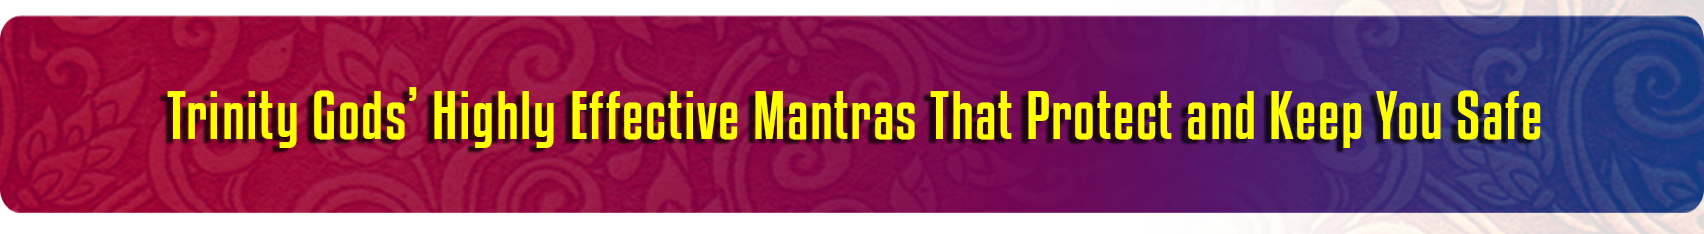 Trinity Moola Mantra